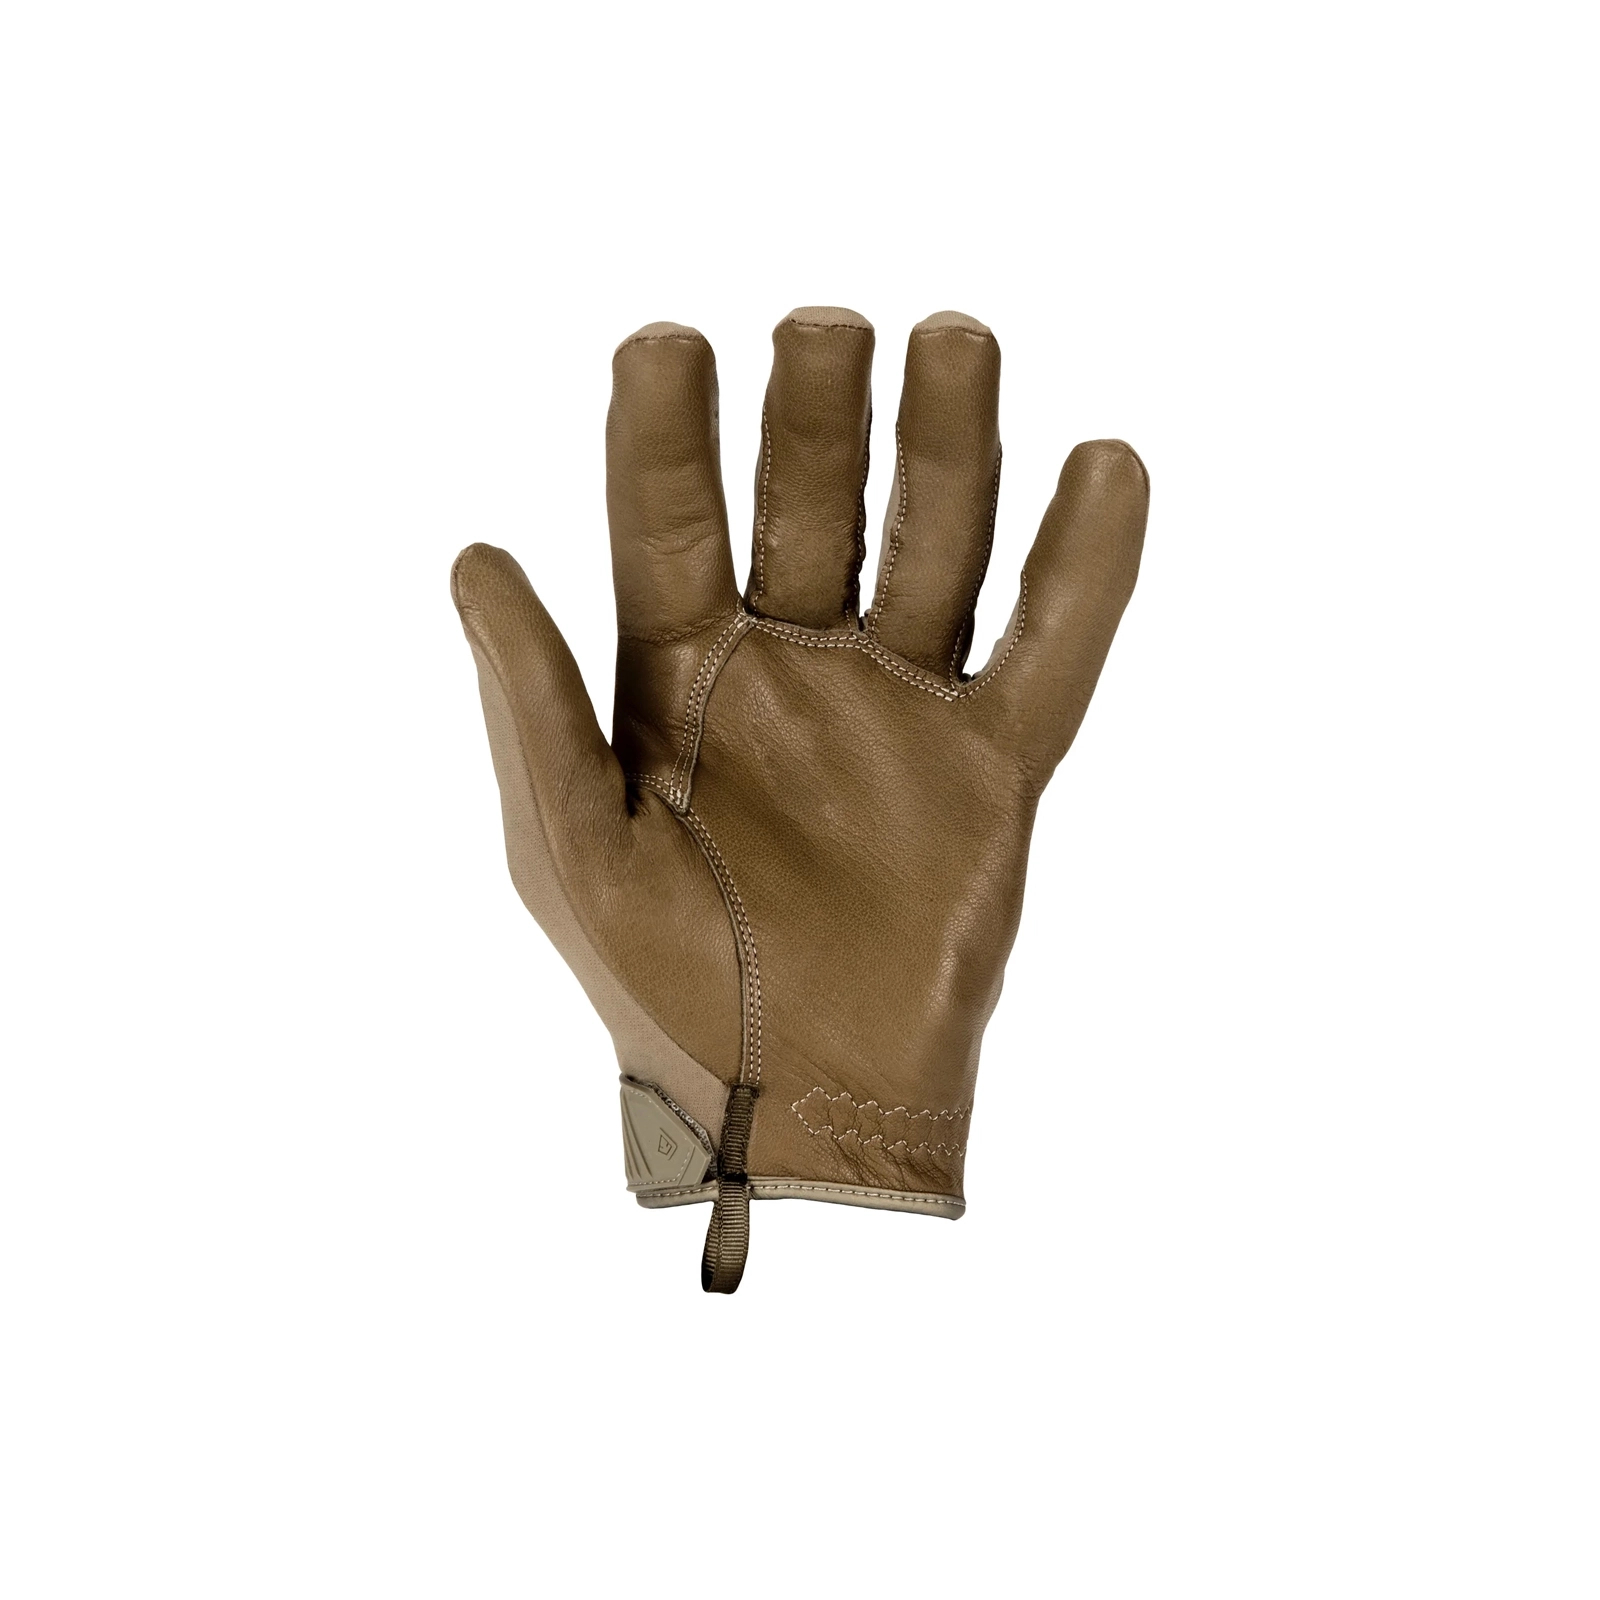 Тактические перчатки First Tactical Mens Pro Knuckle Glove M Coyote (150007-060-M) изображение 2